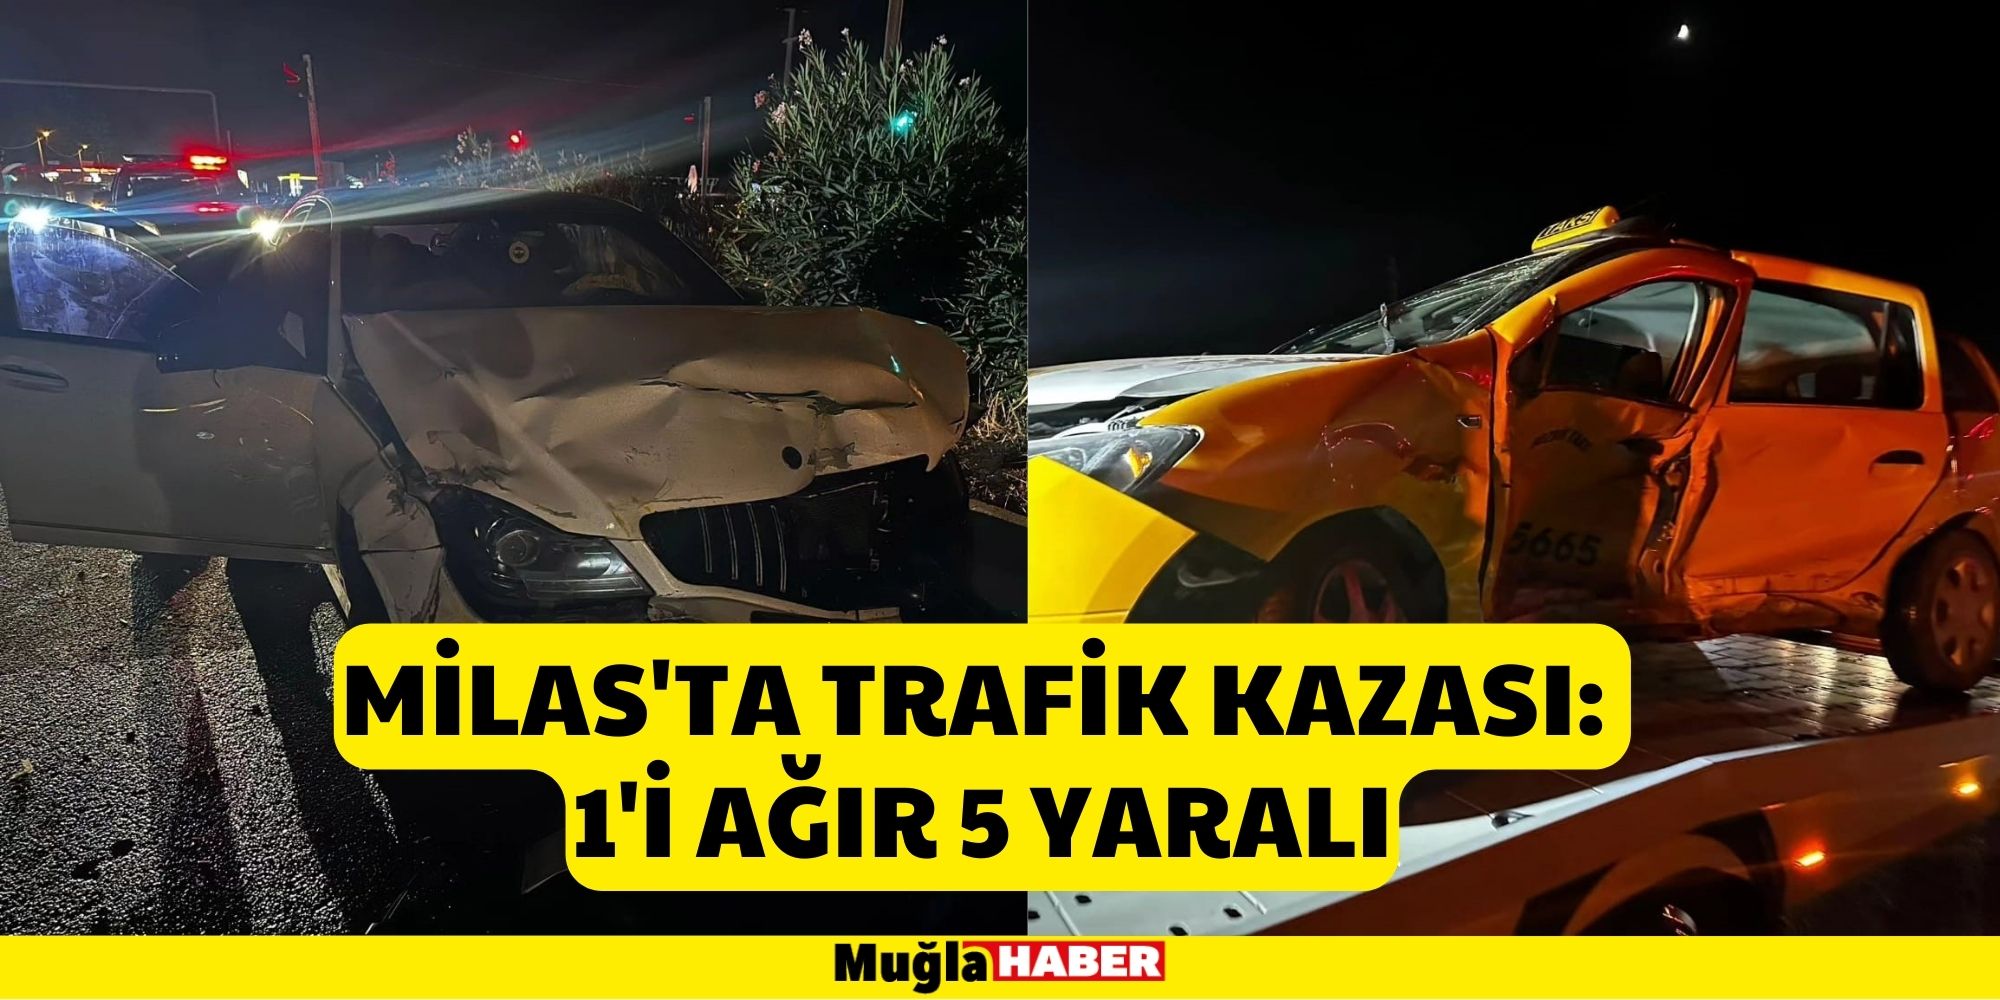 Milas'ta trafik kazası: 1'i ağır 5 yaralı